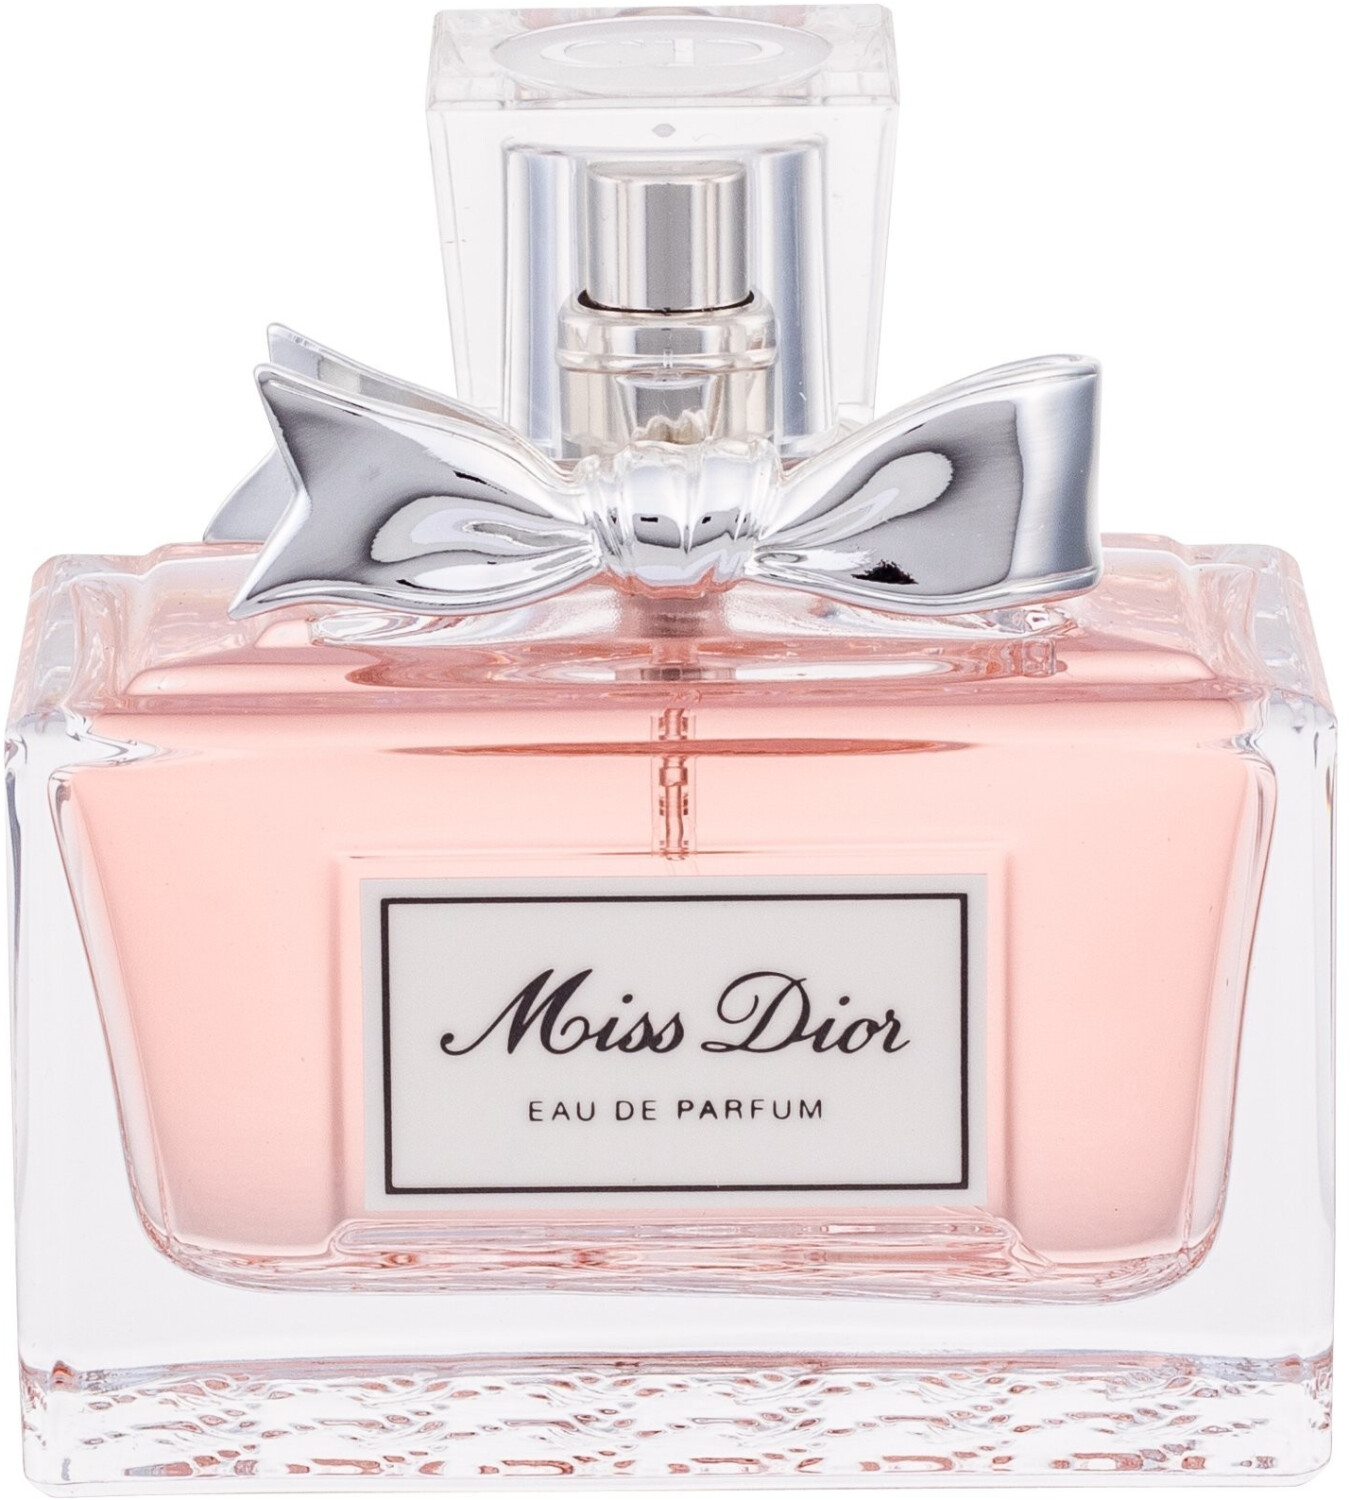 Parfum Dior Miss Dior - Homecare24